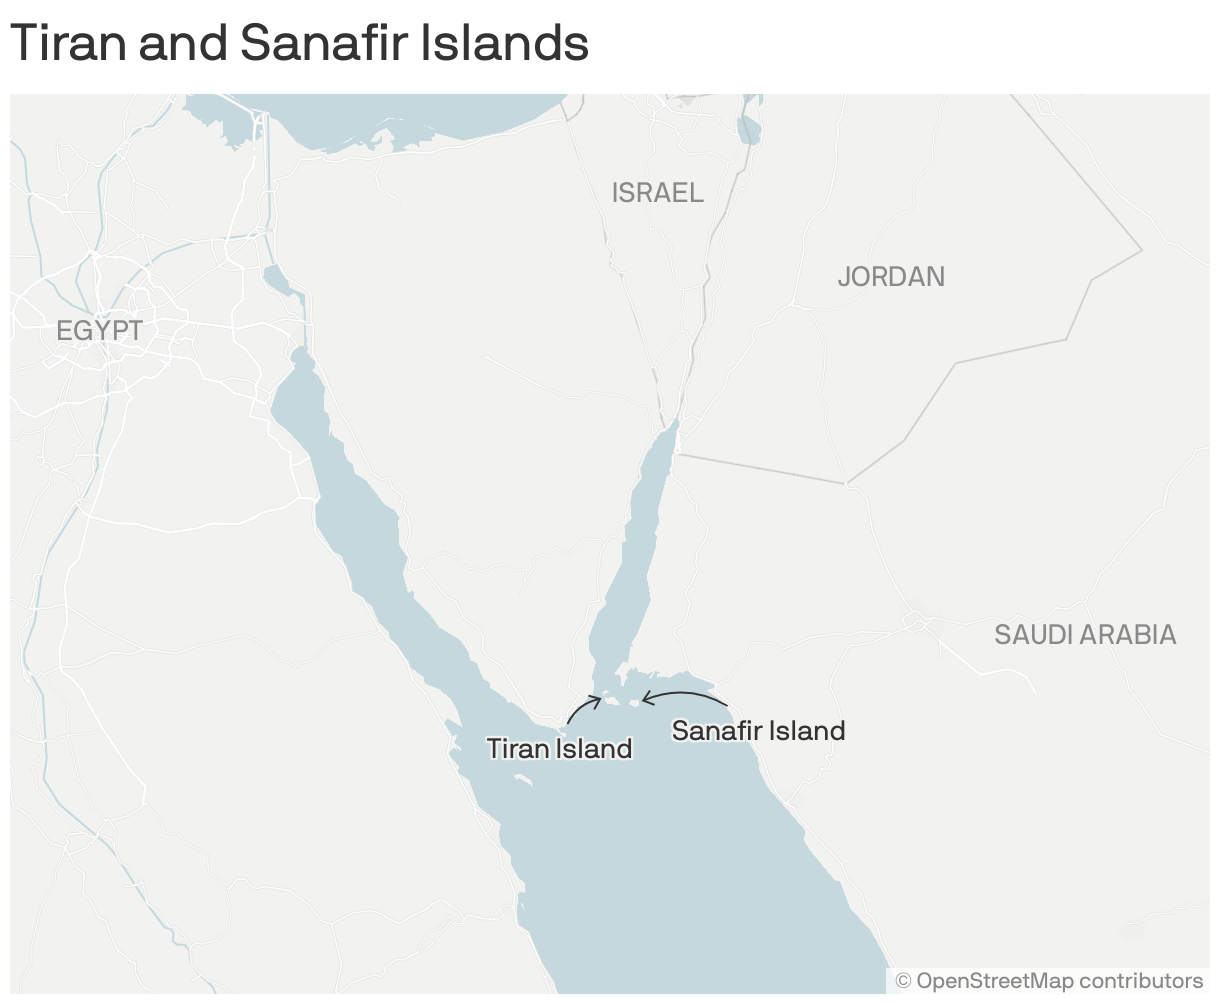 Tiran and Sanafir Islands